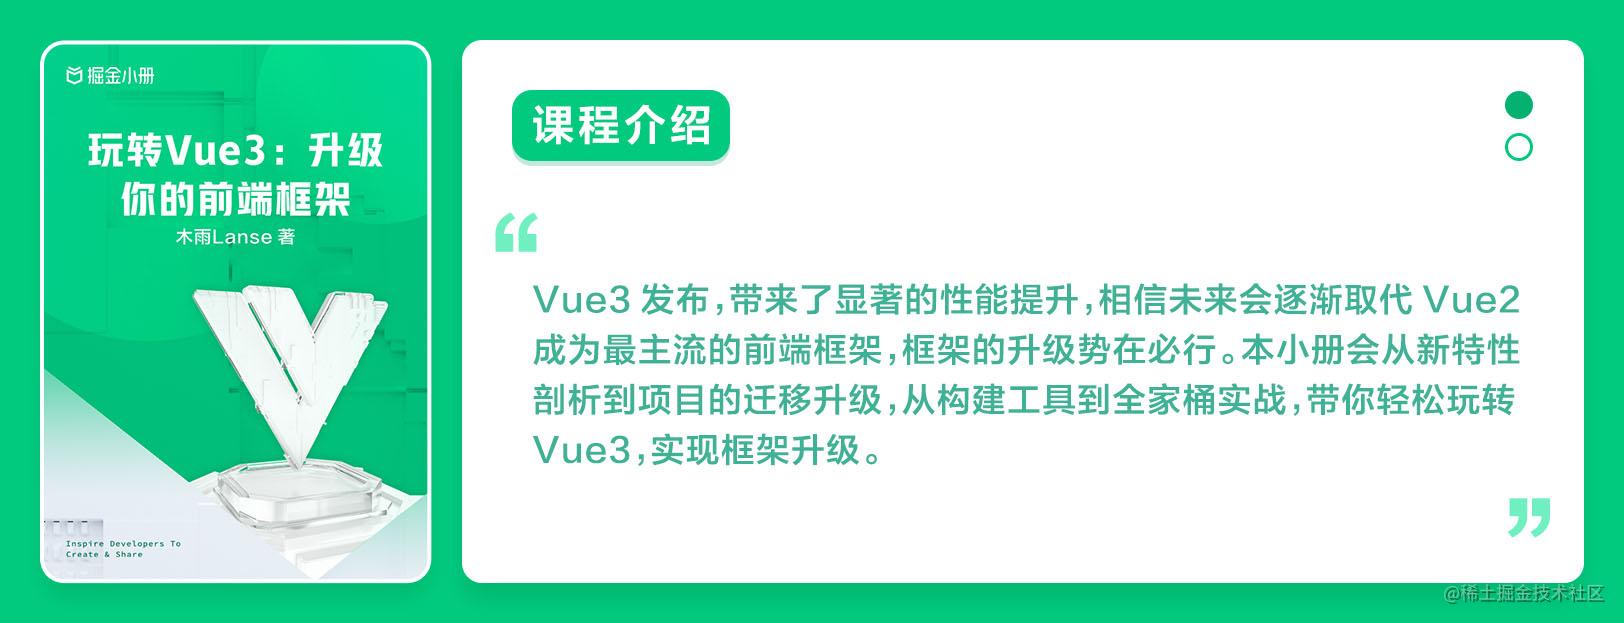 Vue3课程介绍(1624x623).jpg